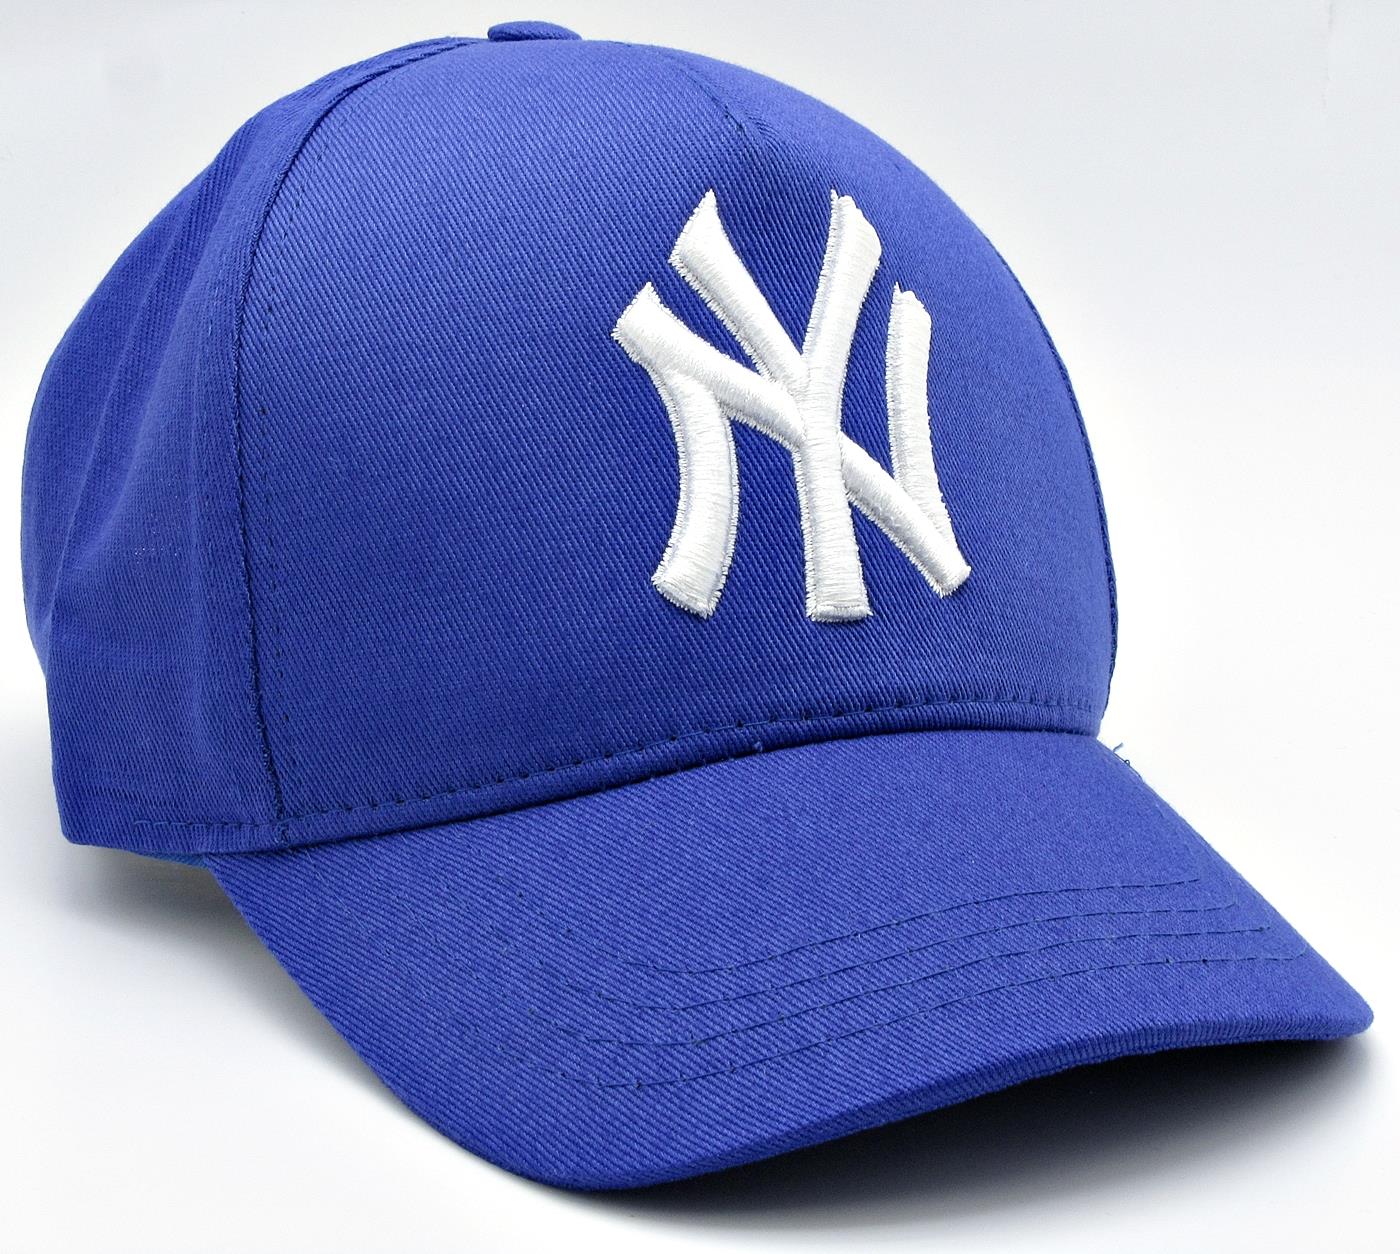 NY Cap Unisex Şapka cp220 - Mavi Beyaz Yazılı